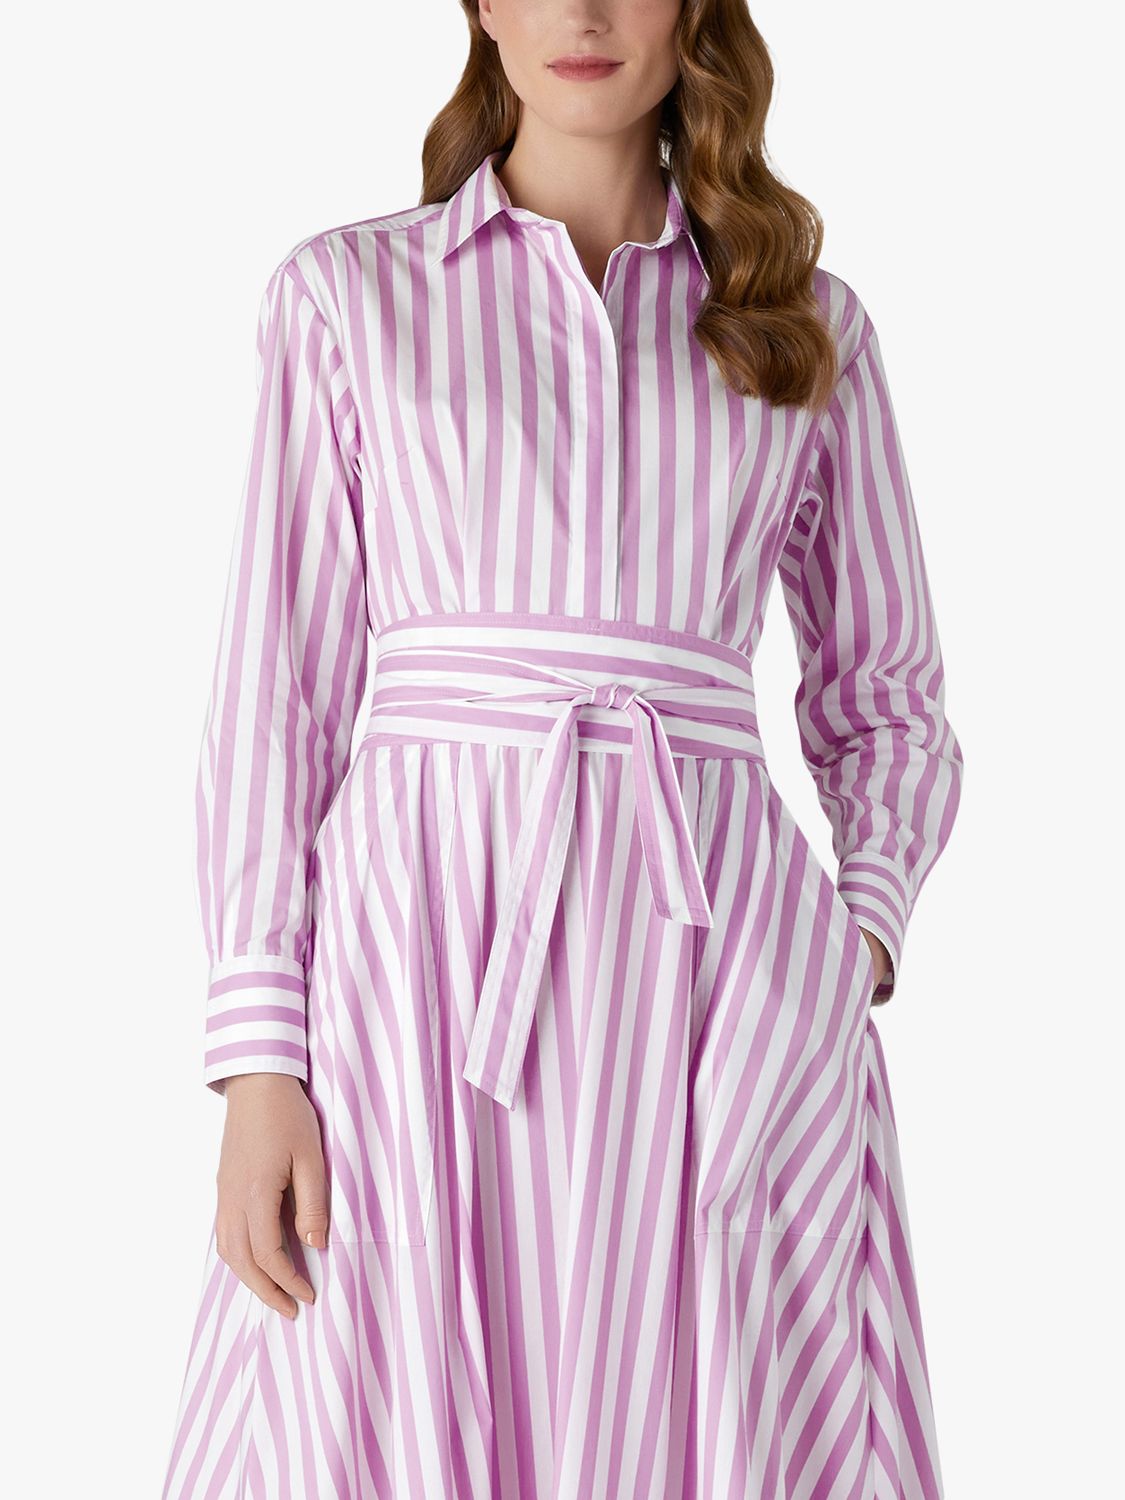 Jasper Conran Blythe Full Skirt Shirt Midi Dress, Lilac/Multi, 18